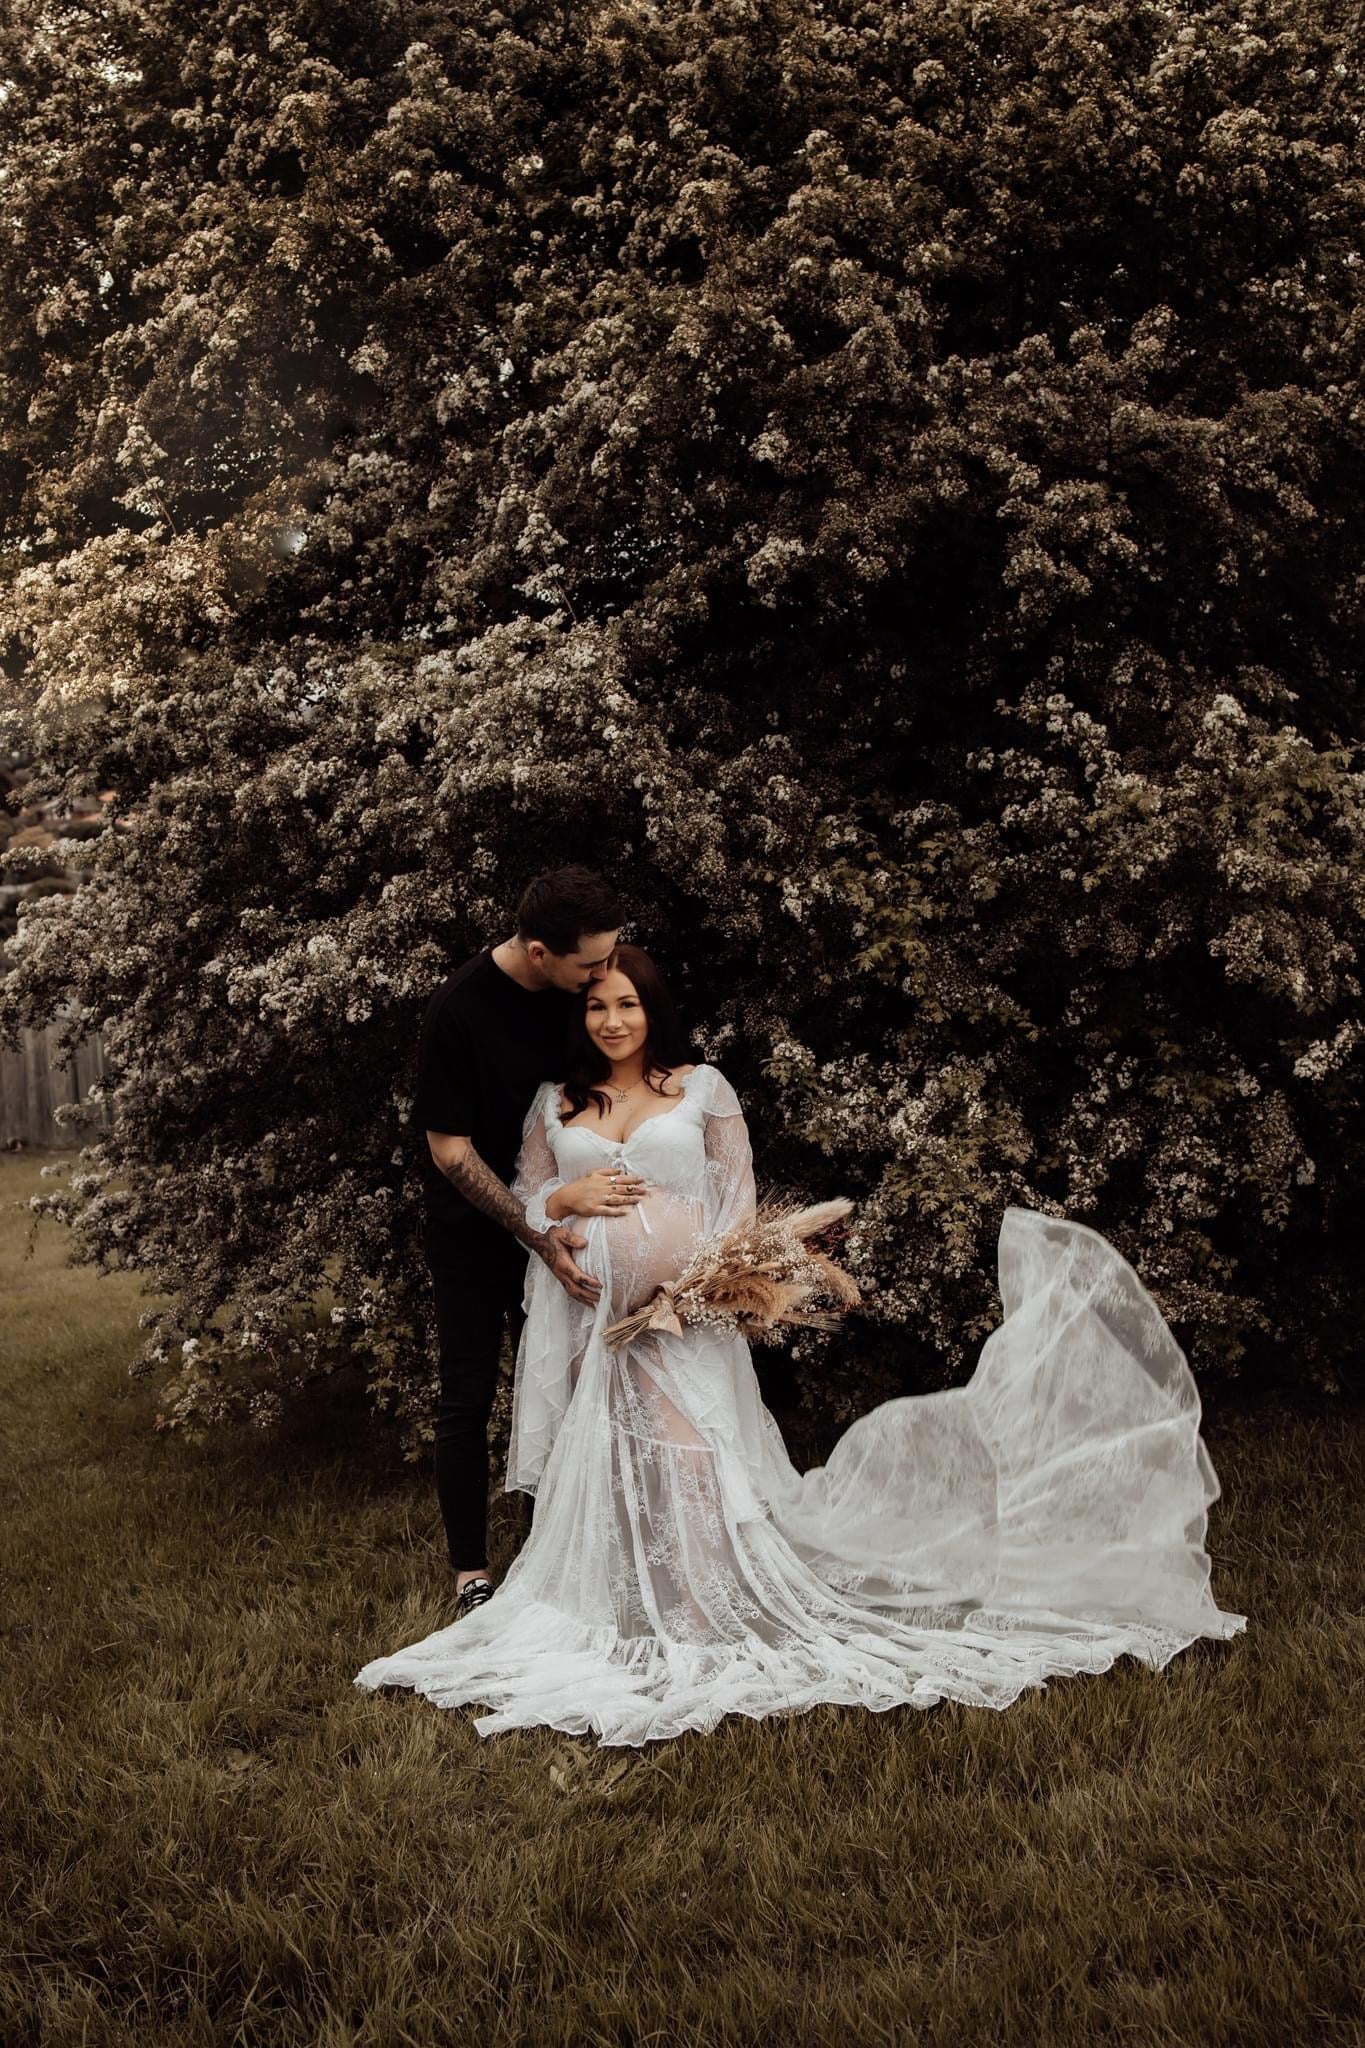 Couple Maternity Photoshoot - Romantic Lace Robe